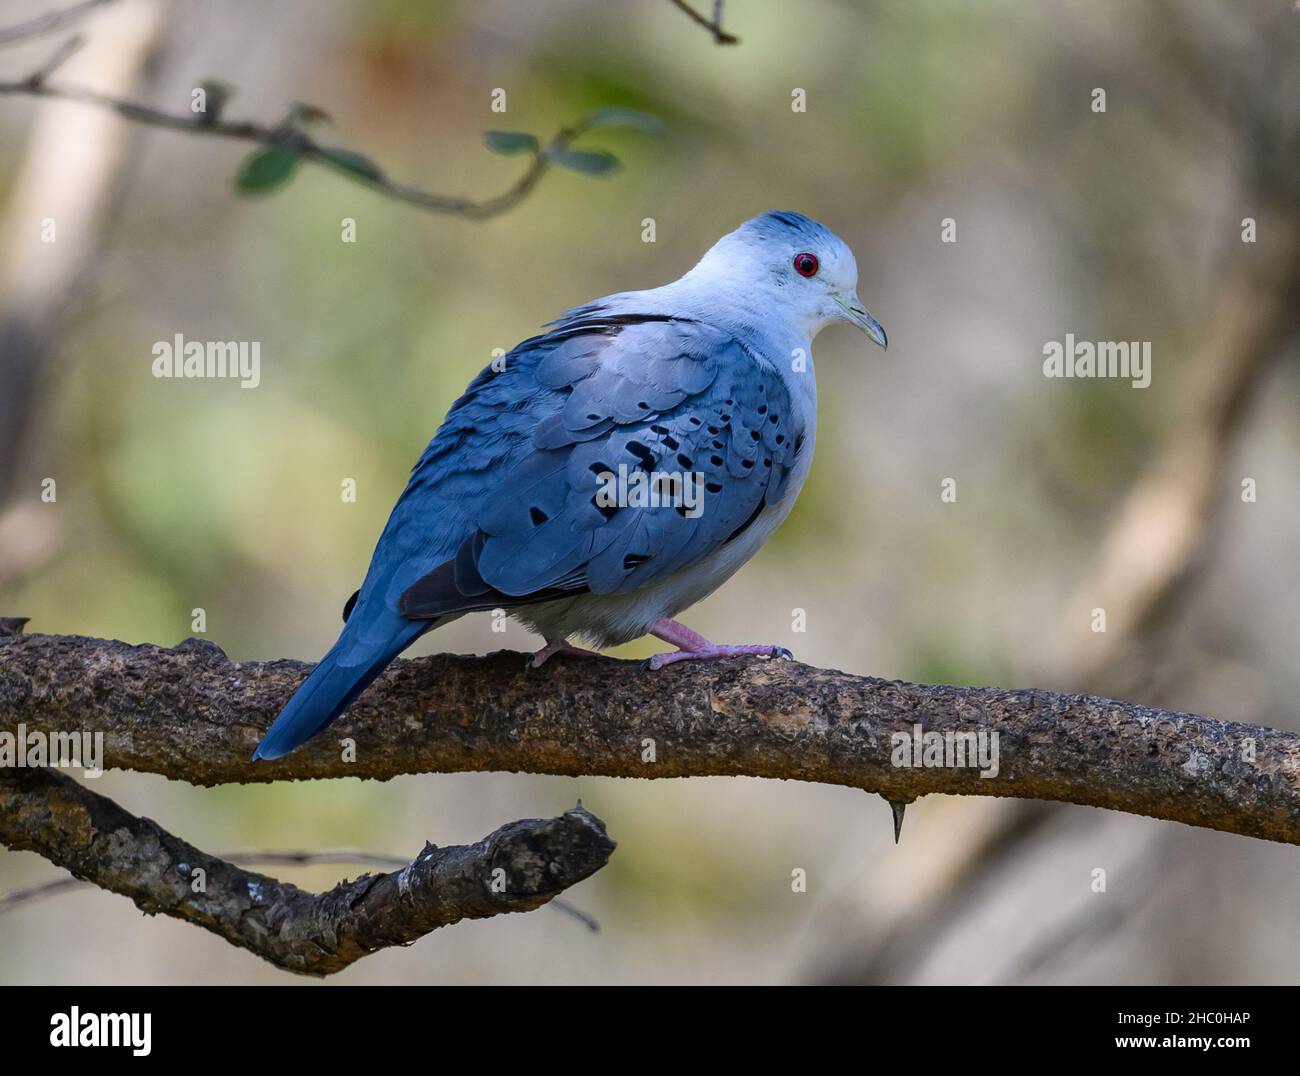 A male Blue Ground Dove (Claravis pretiosa) on a branch. Ecuador, South America. Stock Photo